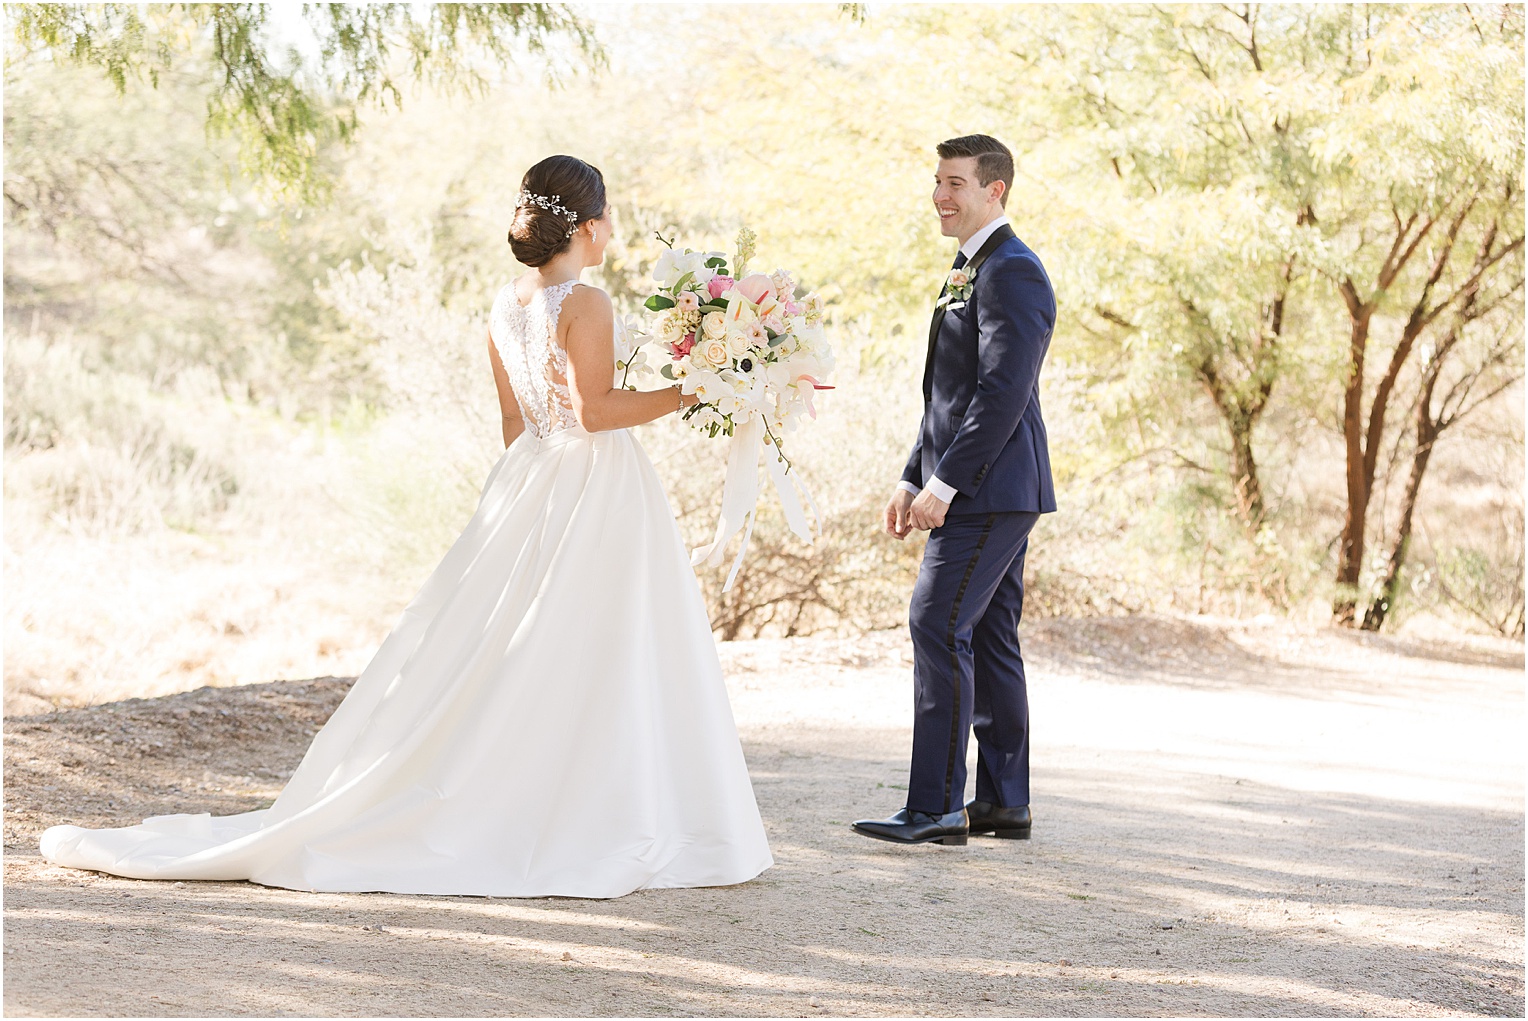 Saguaro Buttes Wedding Tucson, Arizona Farnaz & Brian romantic outdoor first look between bride and groom